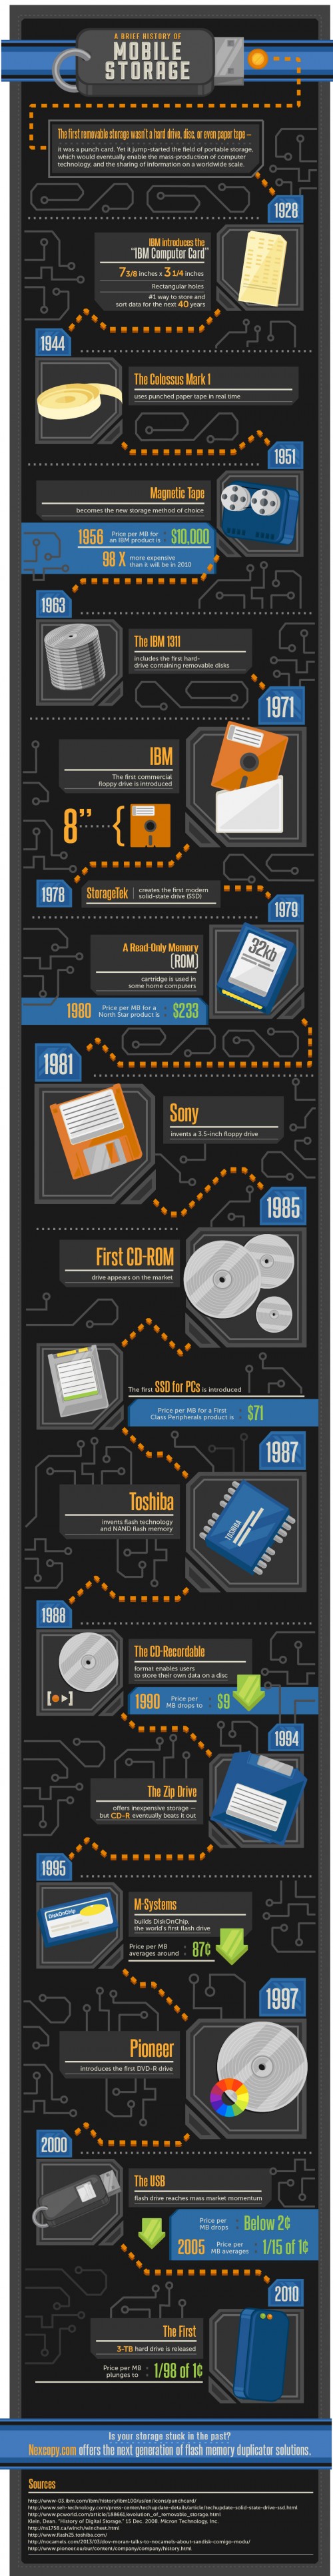 history_portable_storage_infographic.jpg